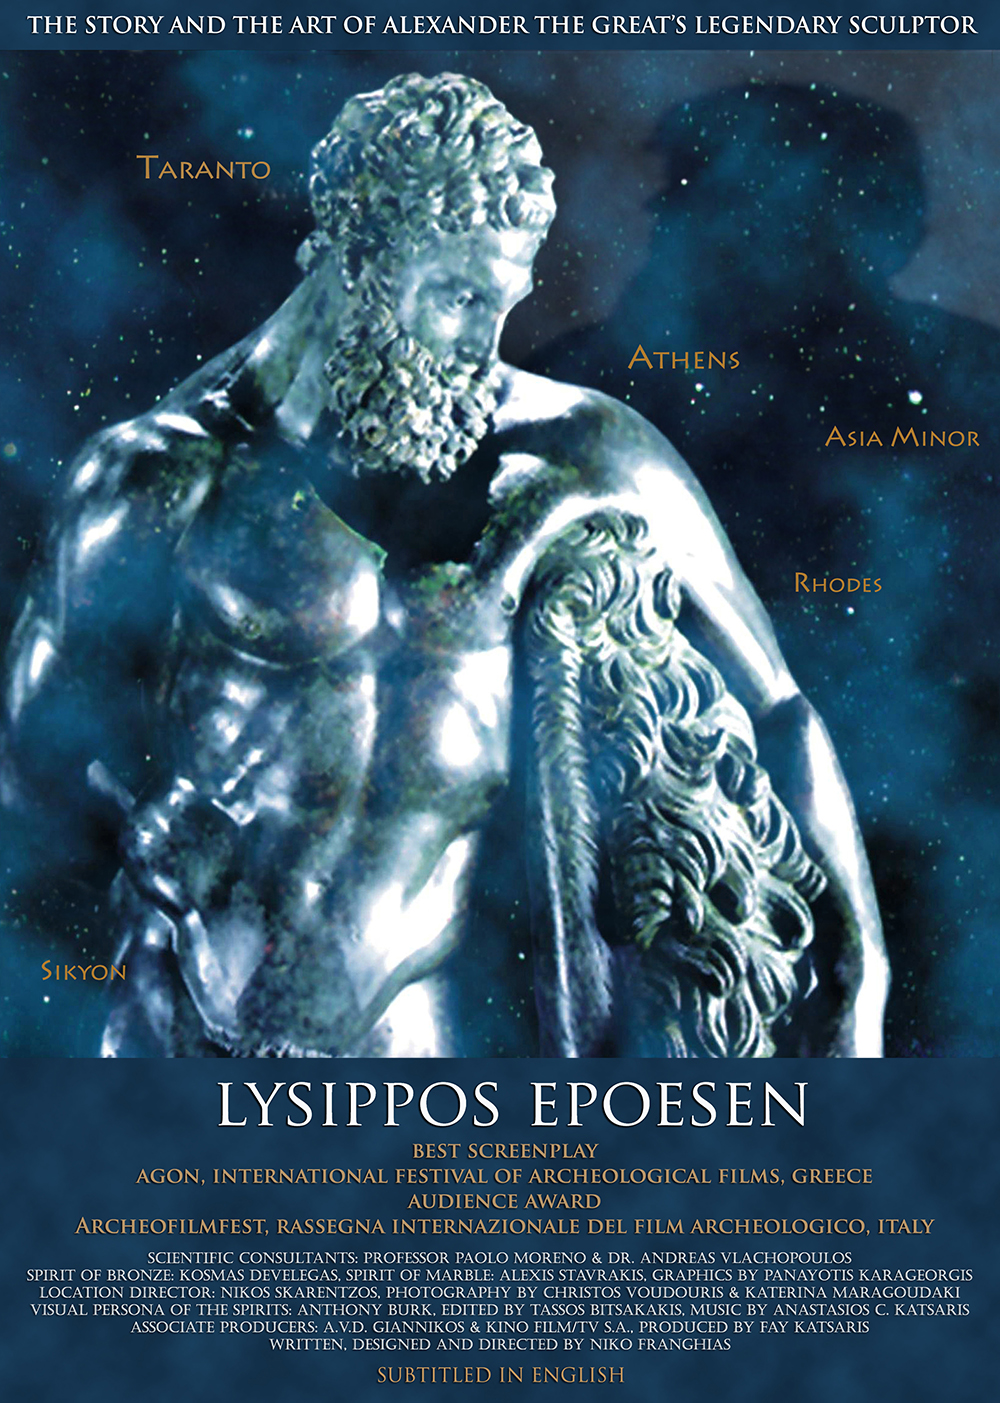 Lysippos Epoesen (Lysippos Created)